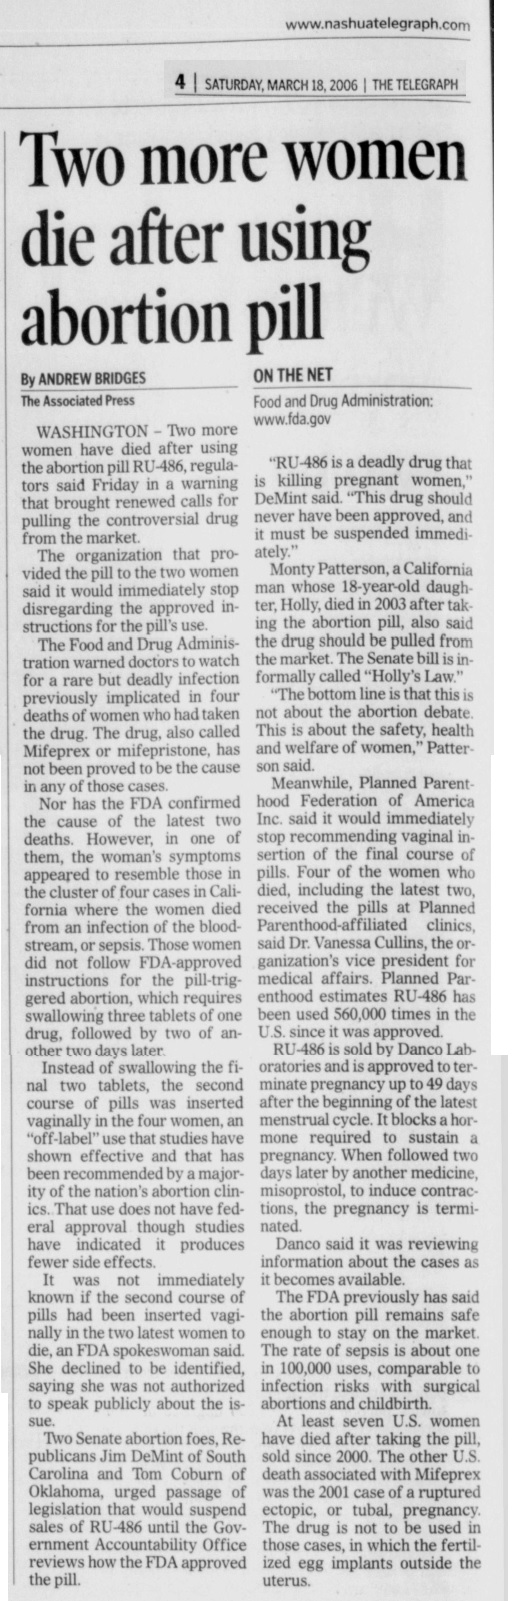 Image: 2006 Abortion pill deaths Image Nashua Telegraph